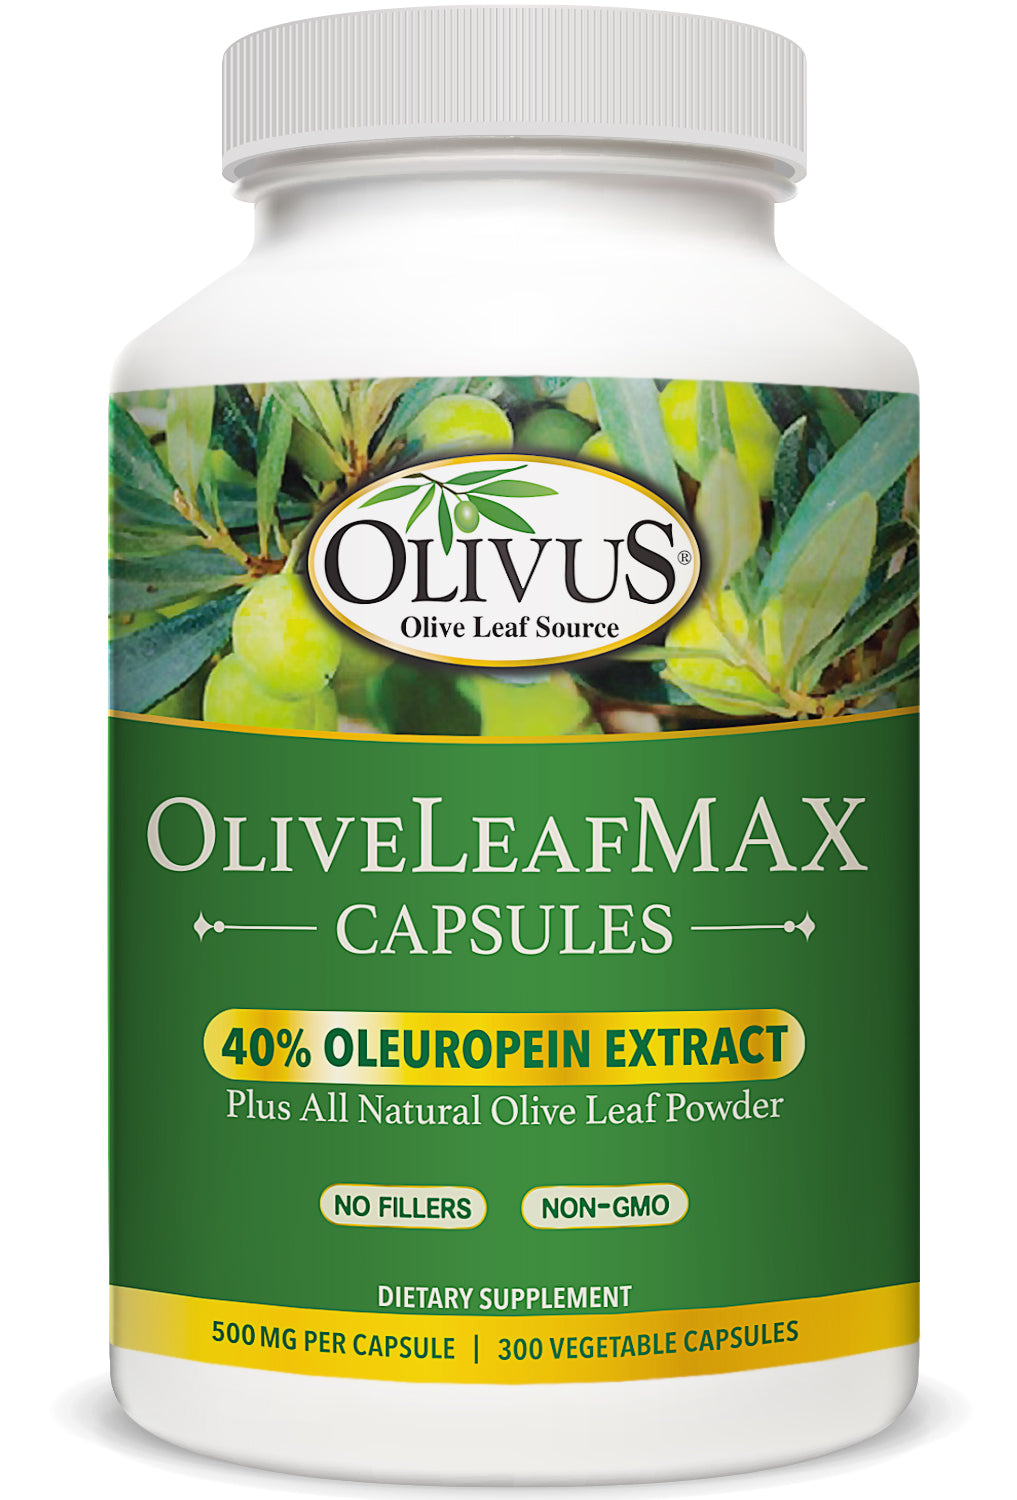 OliveLeafMAX Capsules - 300 Count - Super Strength